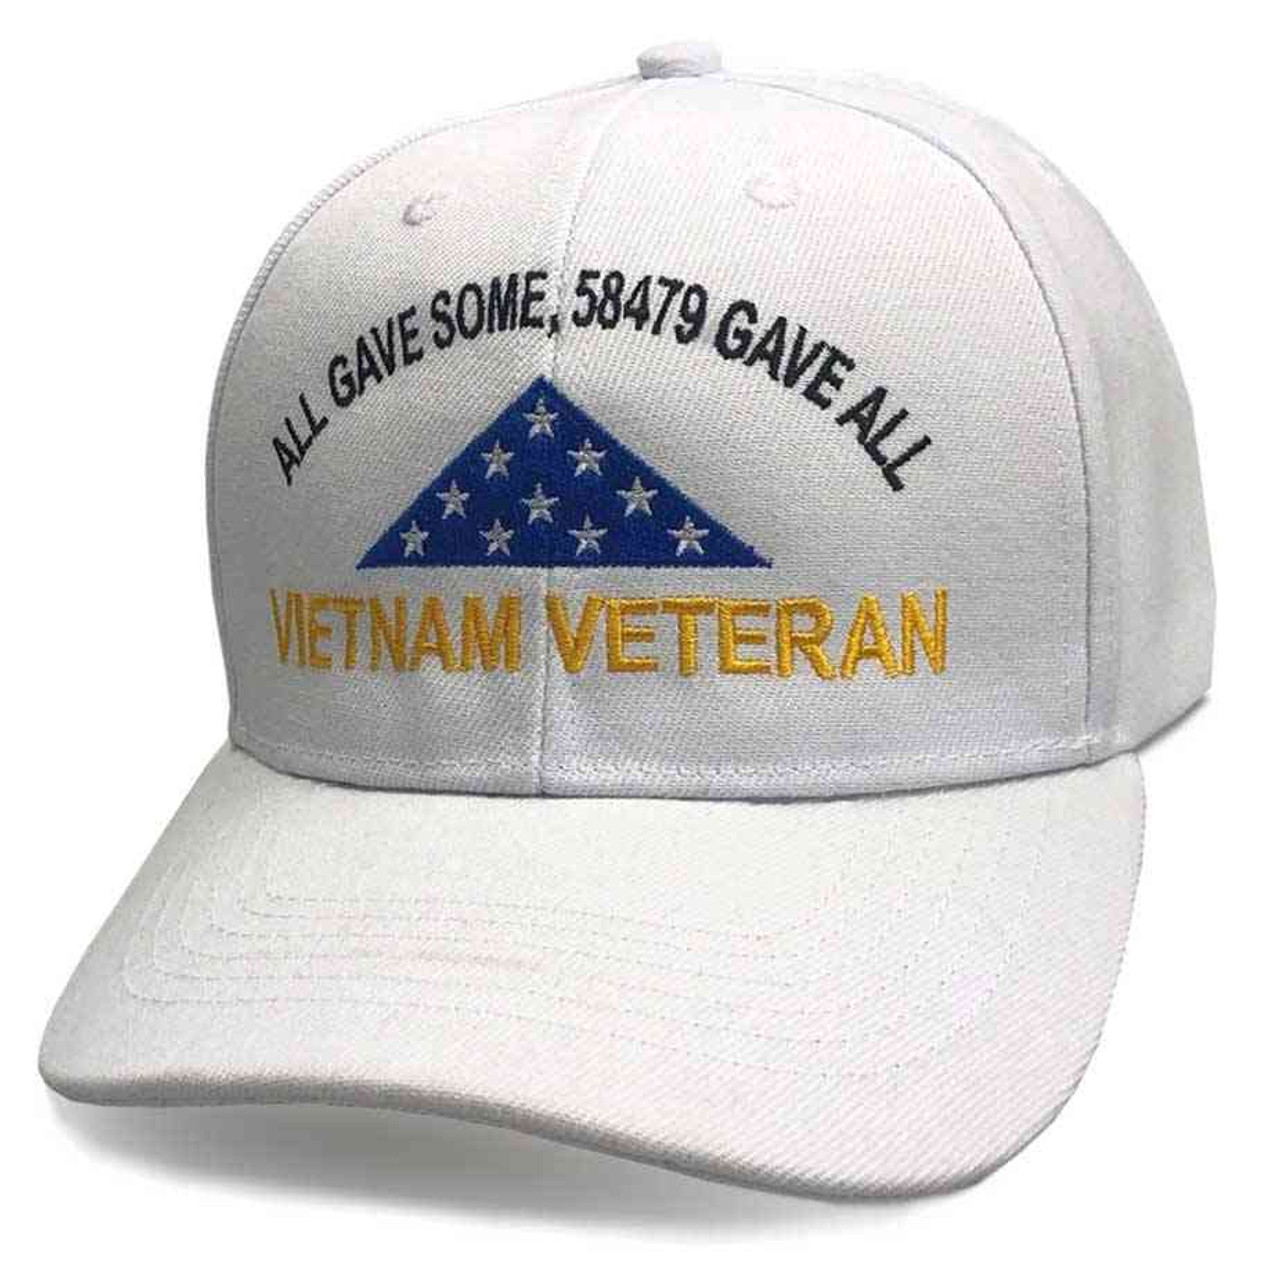 Vietnam Veteran Hat All Gave Some 58479 Gave All